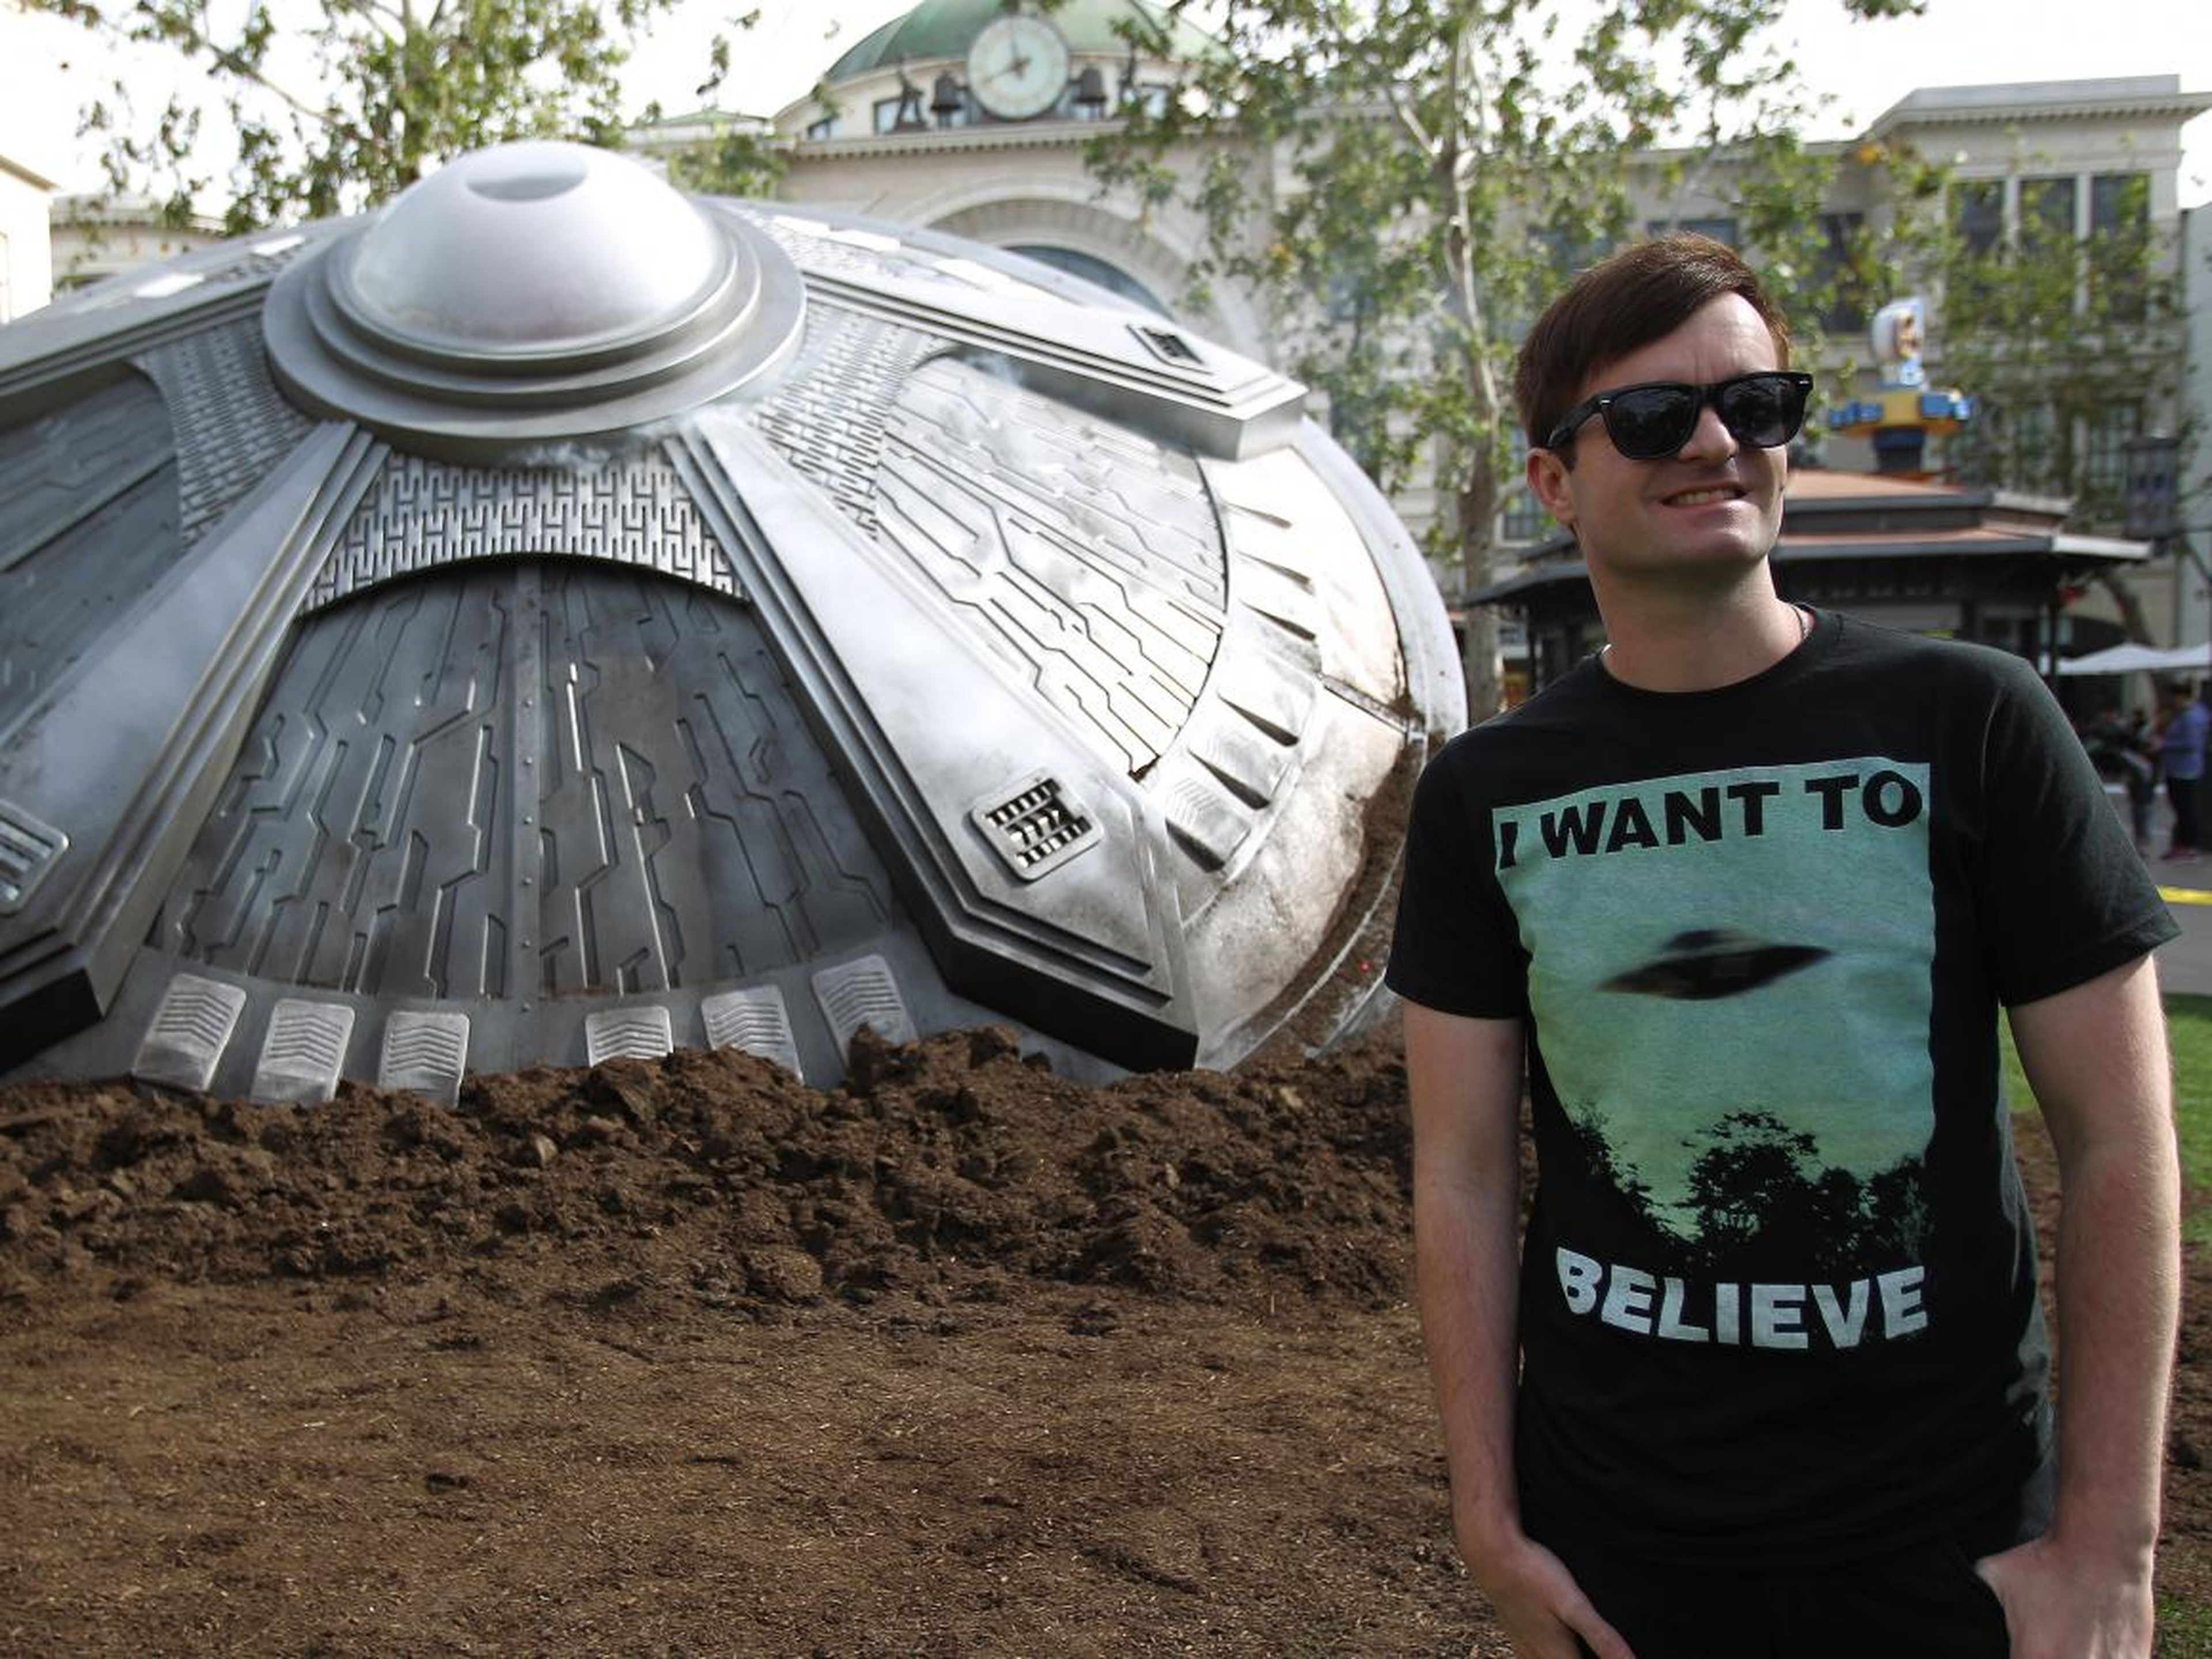 Fan wears "I want to believe" t-shirt in front of UFO model for Fox's "The X-Files" UFO episode.